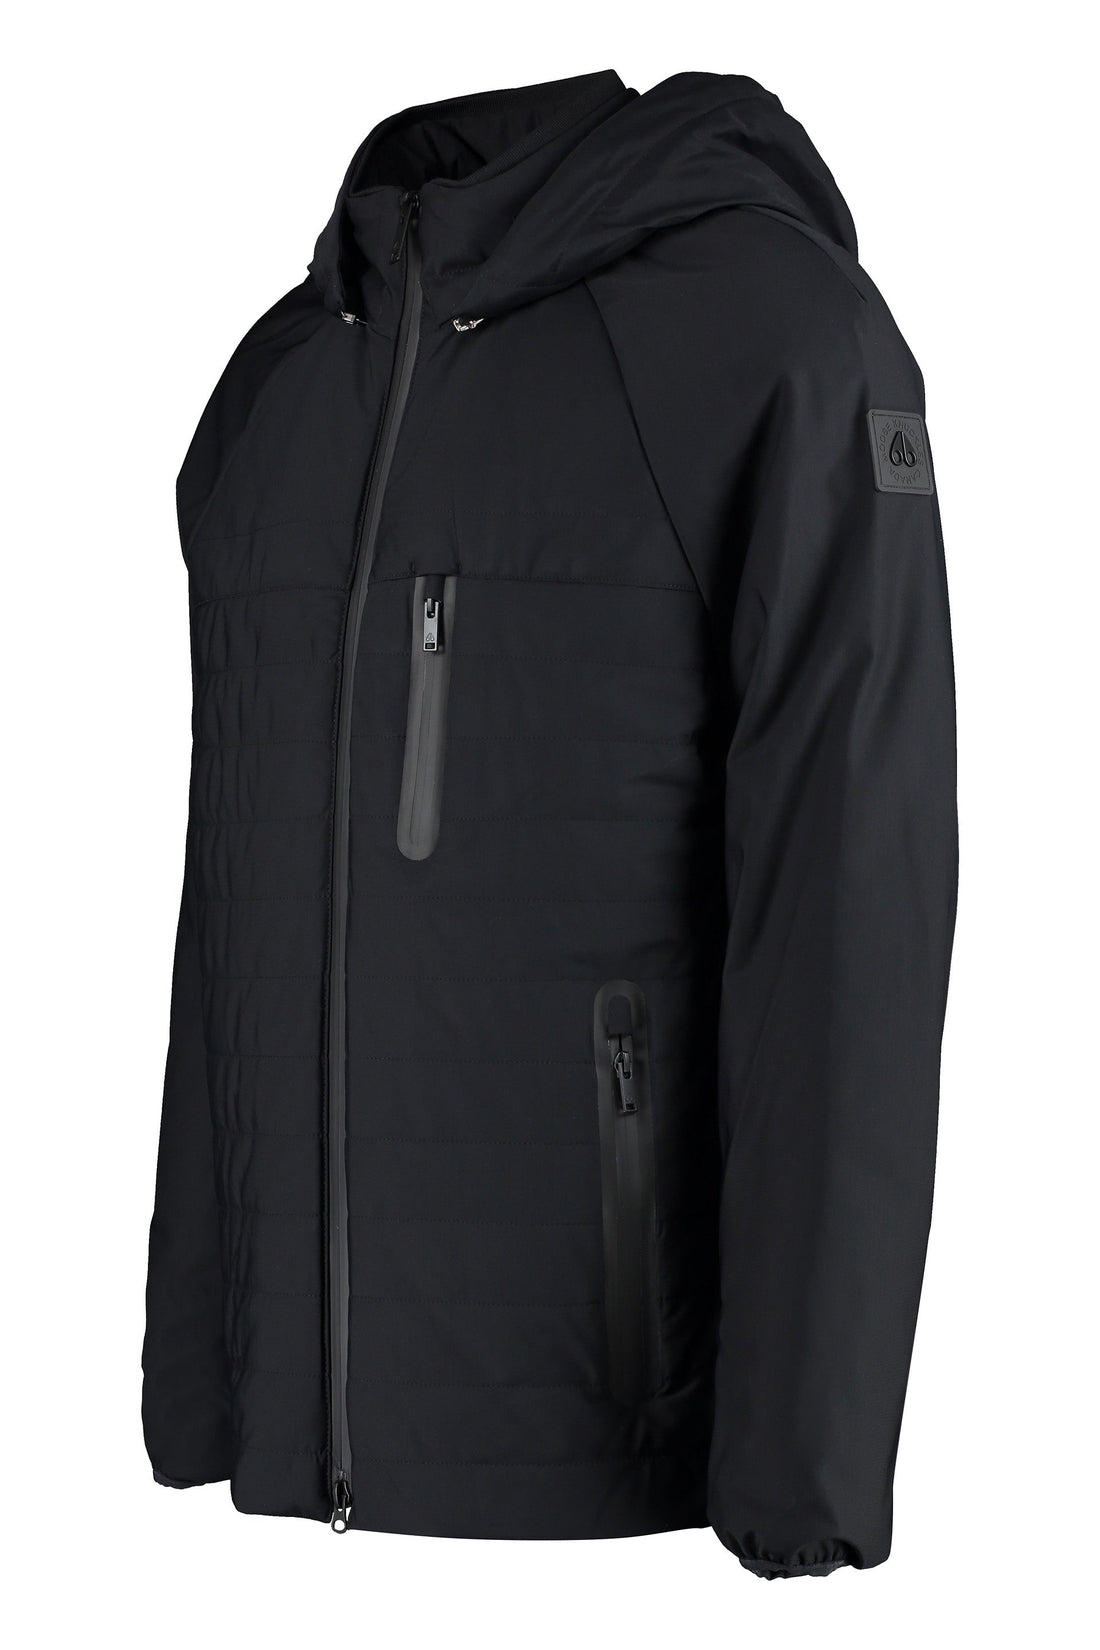 Moose Knuckles-OUTLET-SALE-Brunswick hooded full-zip down jacket-ARCHIVIST